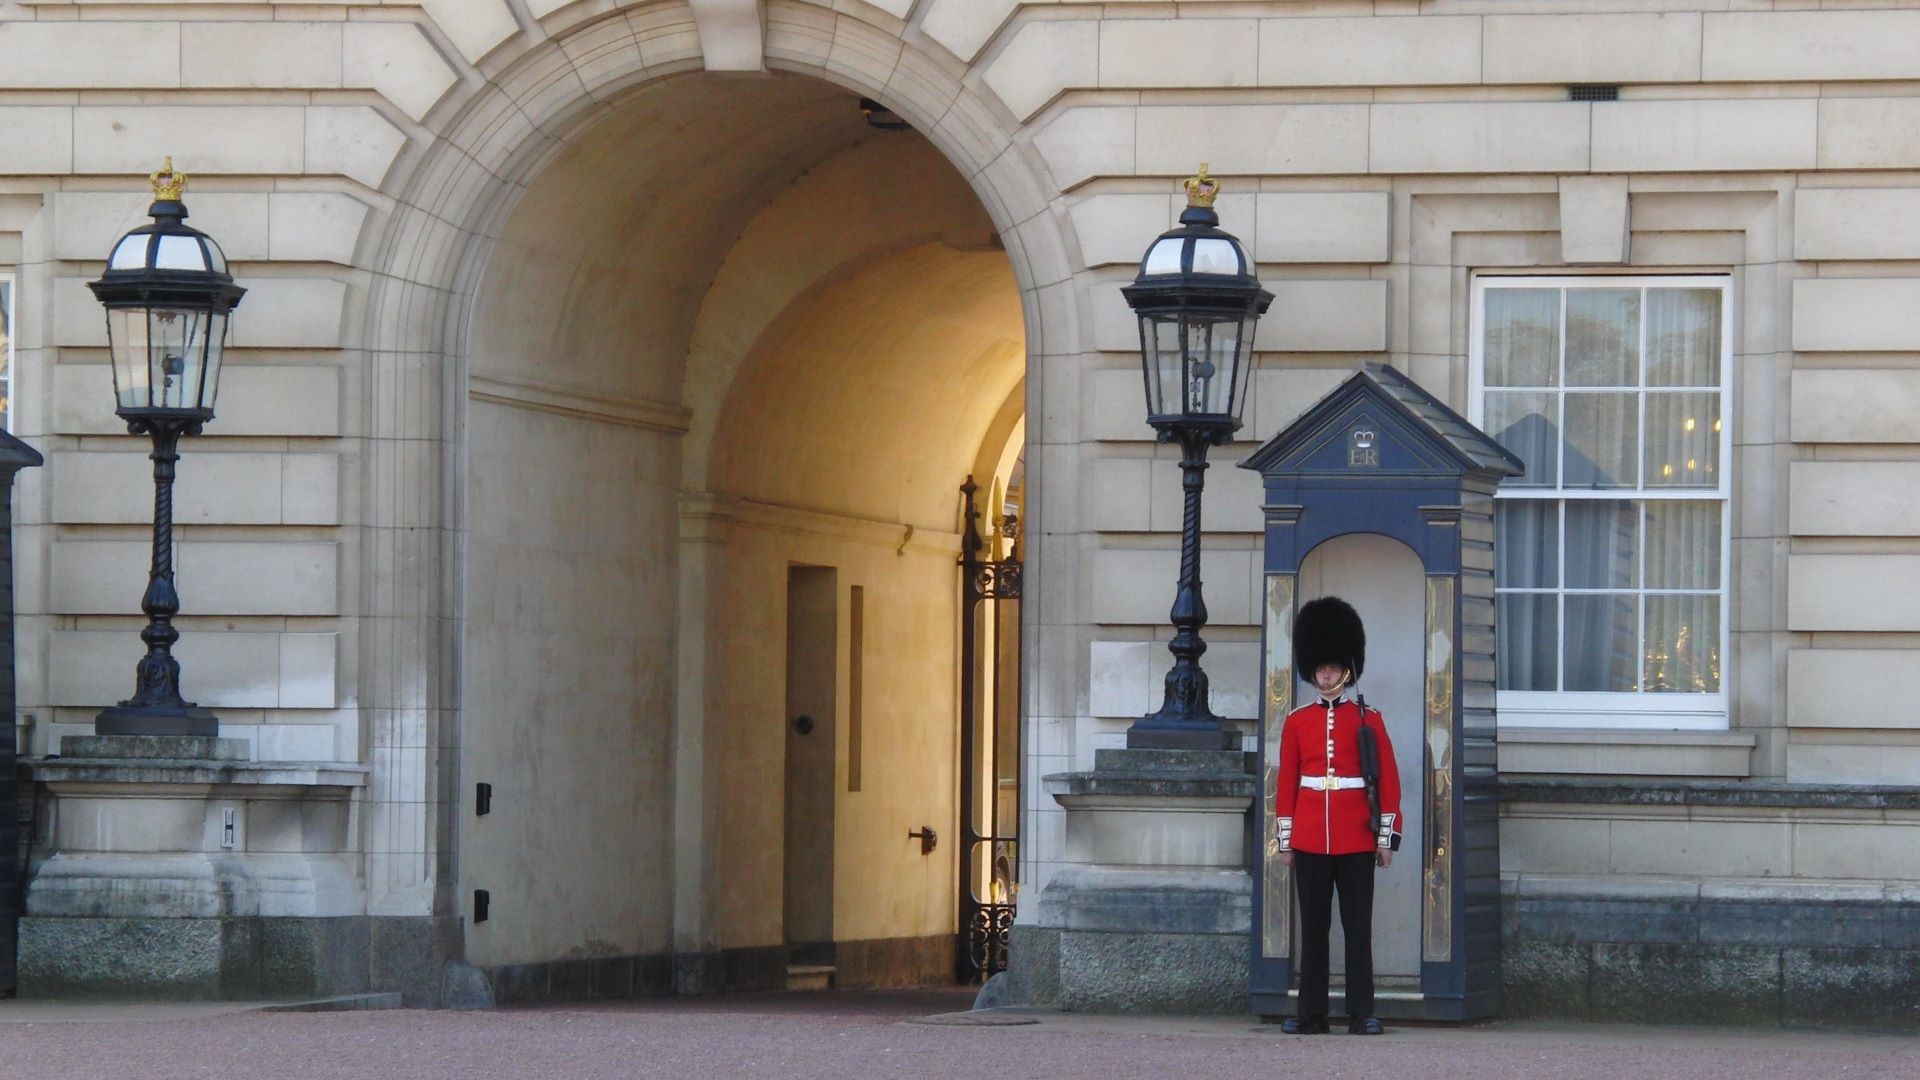 Guard on duty outside Buckingham Palace